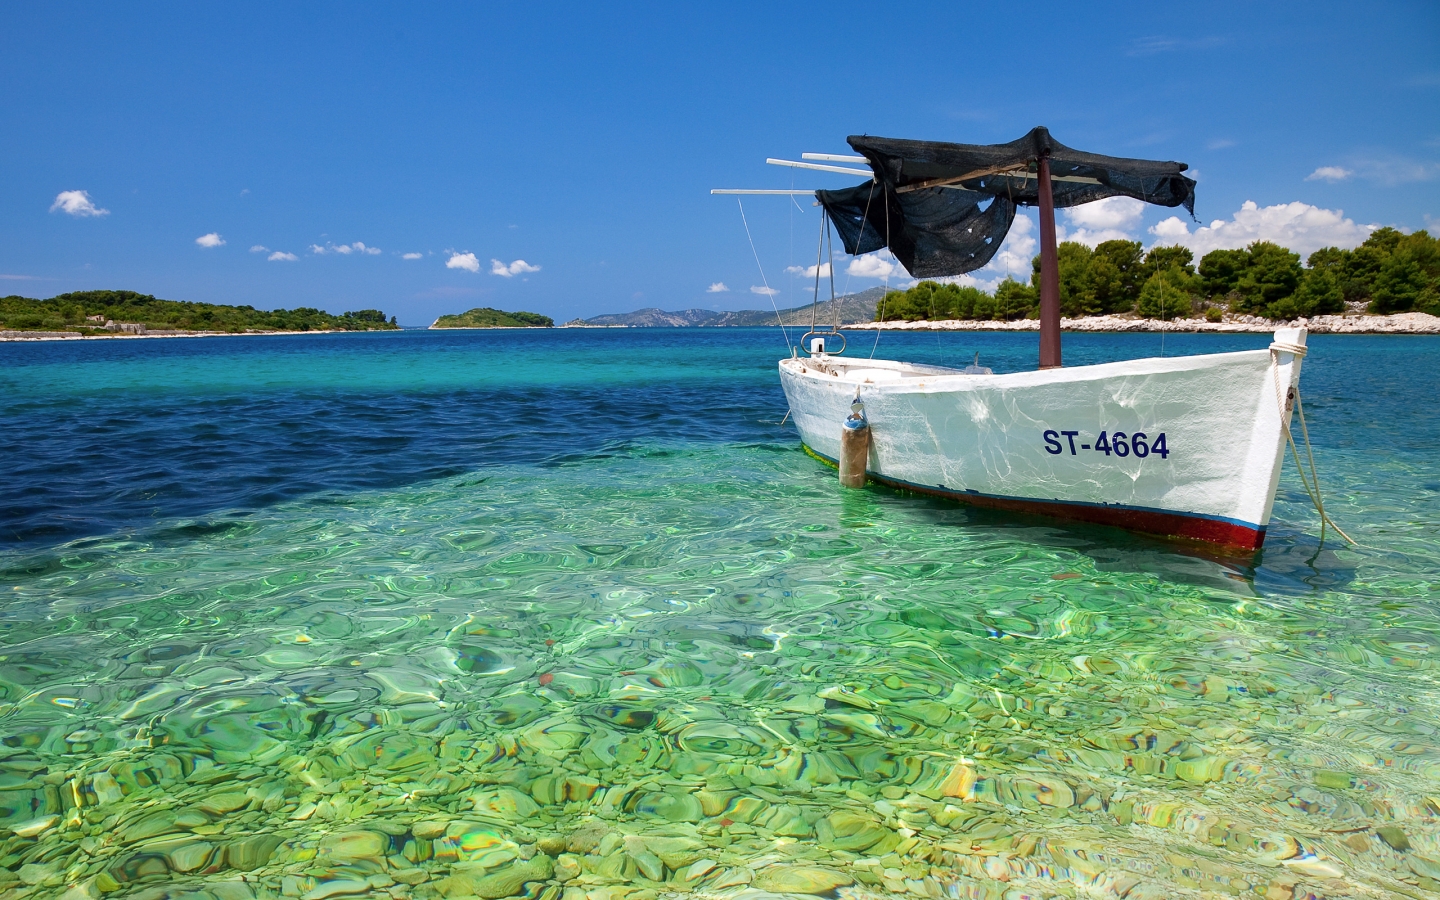 Croatian Boat for 1440 x 900 widescreen resolution